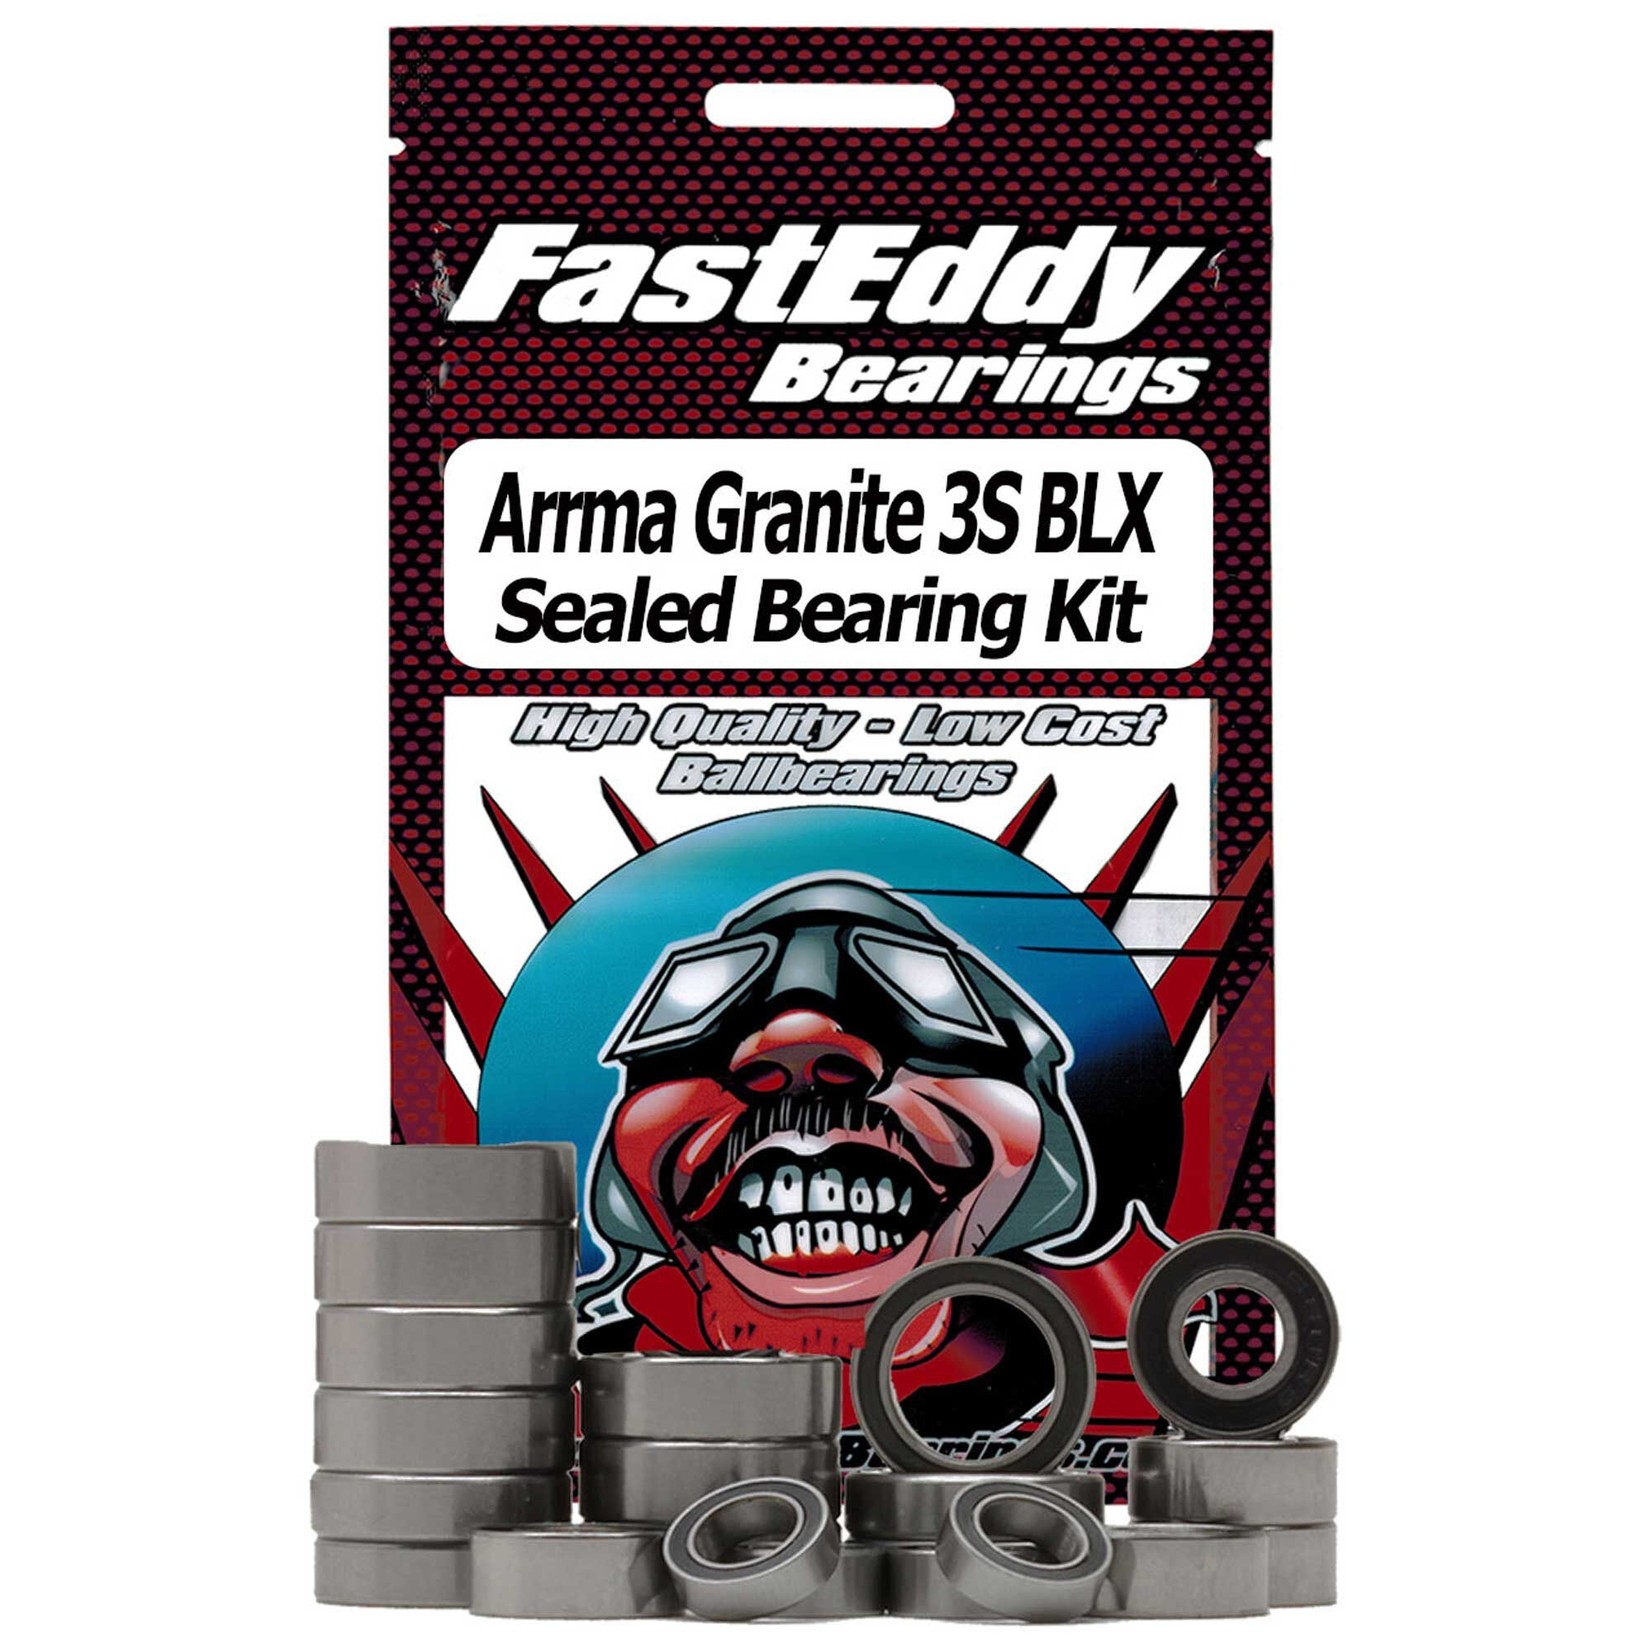 Fast Eddy Sealed Bearing Kit: ARRMA GRANITE 3S BLX